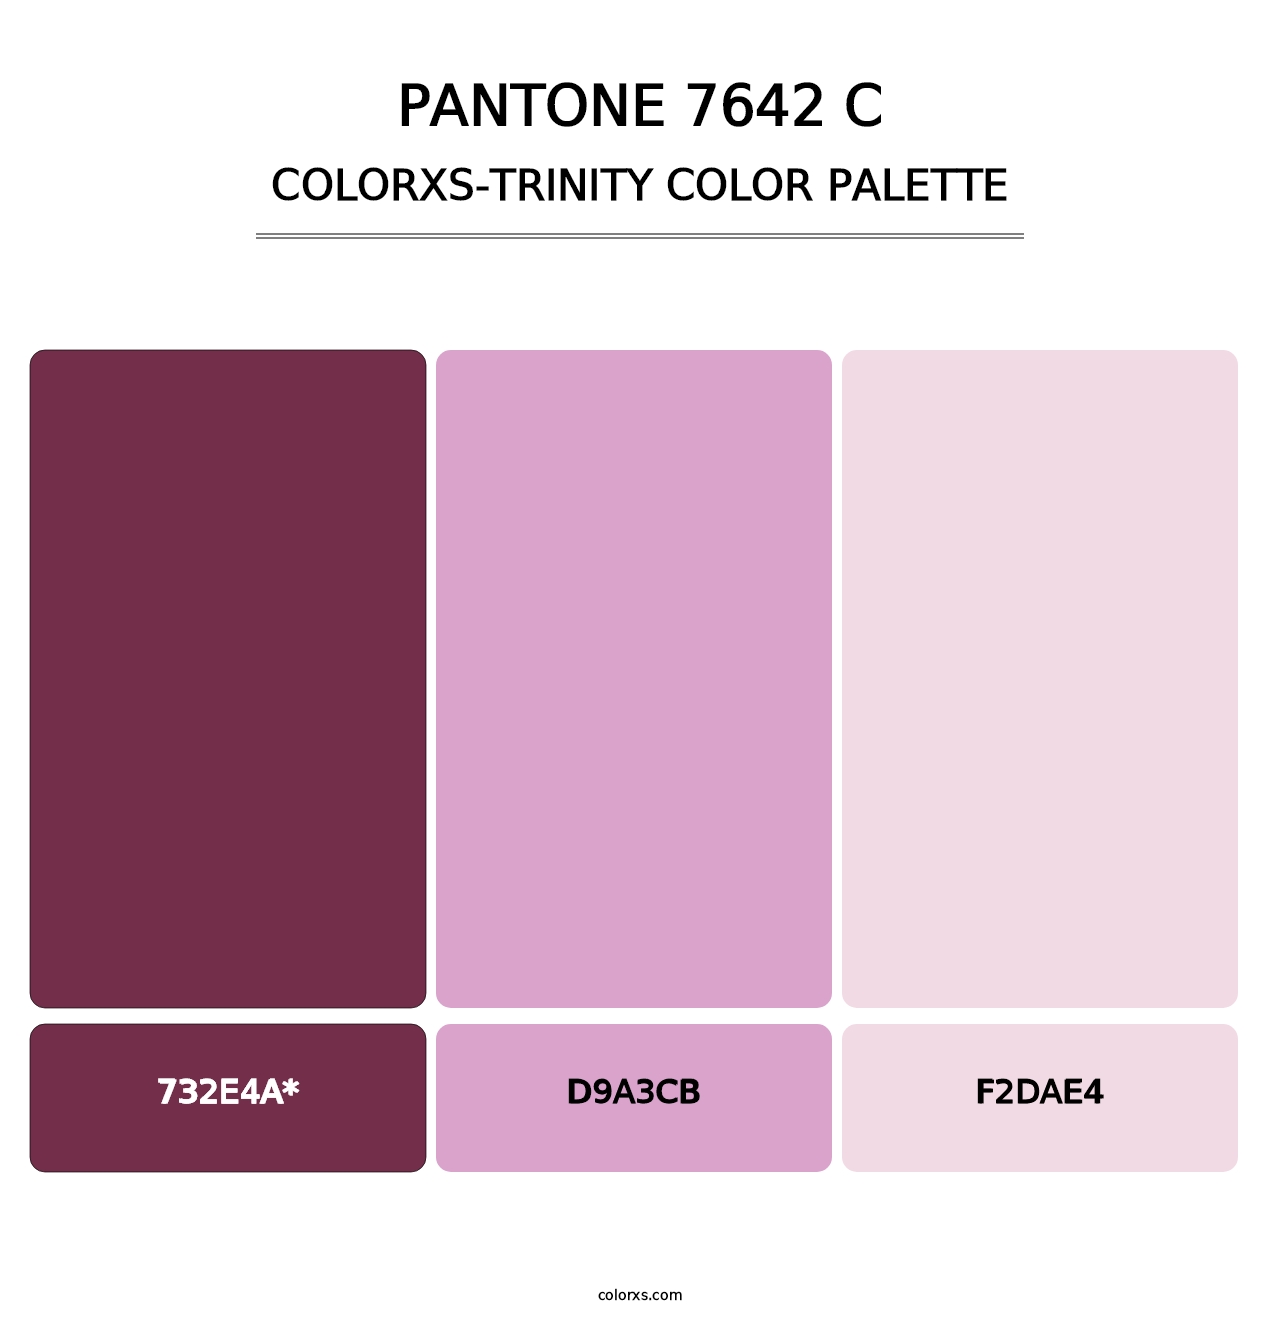 PANTONE 7642 C - Colorxs Trinity Palette